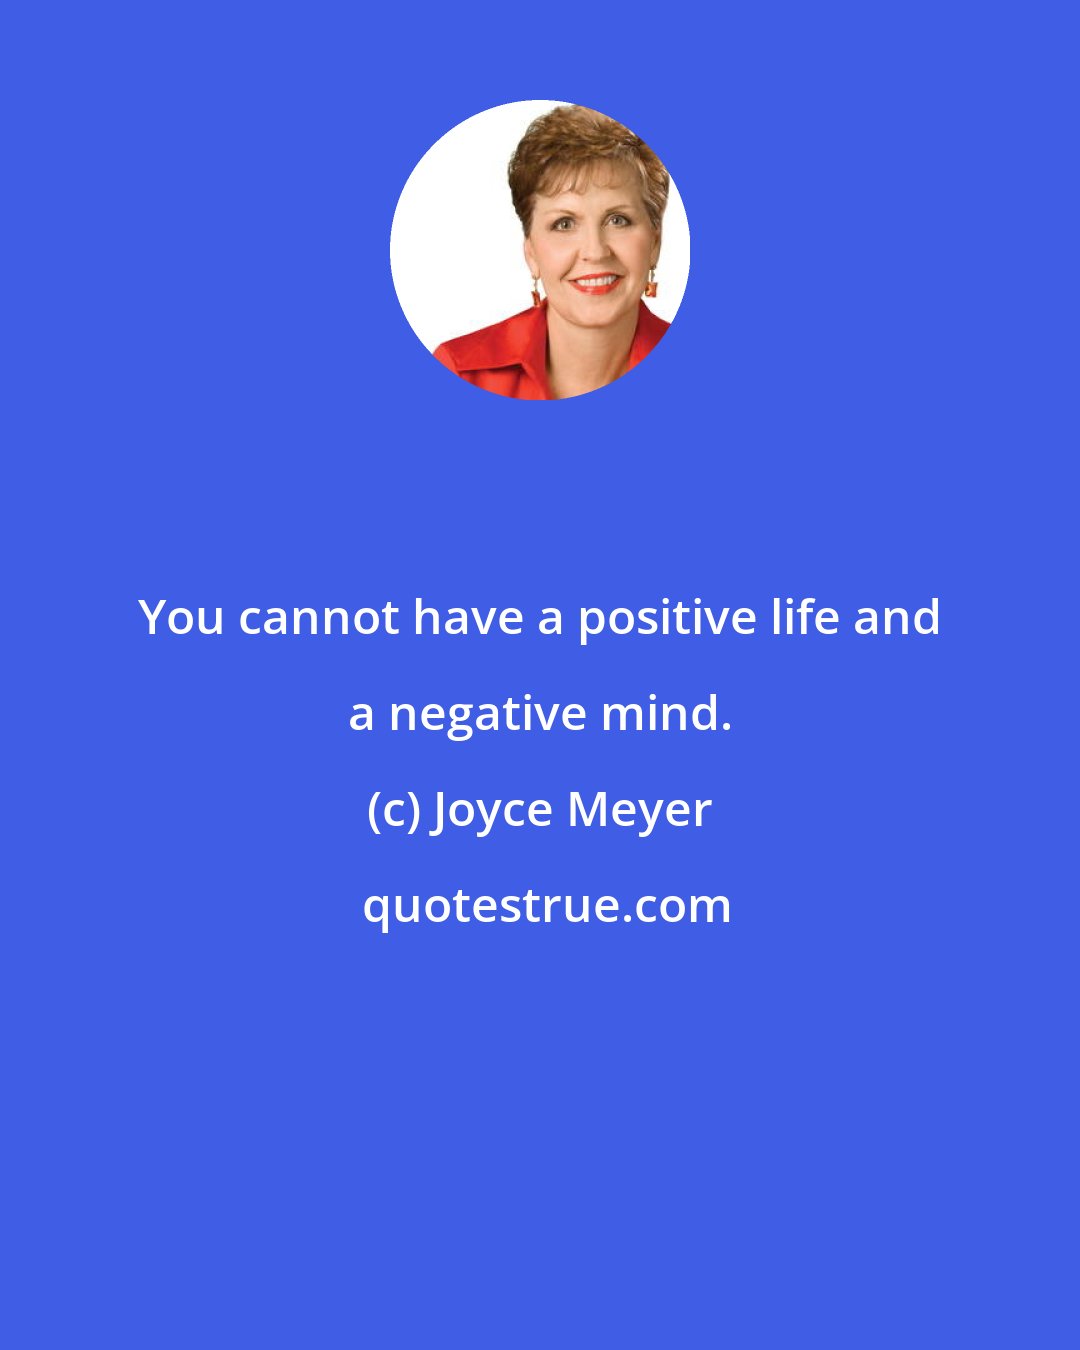 Joyce Meyer: You cannot have a positive life and a negative mind.